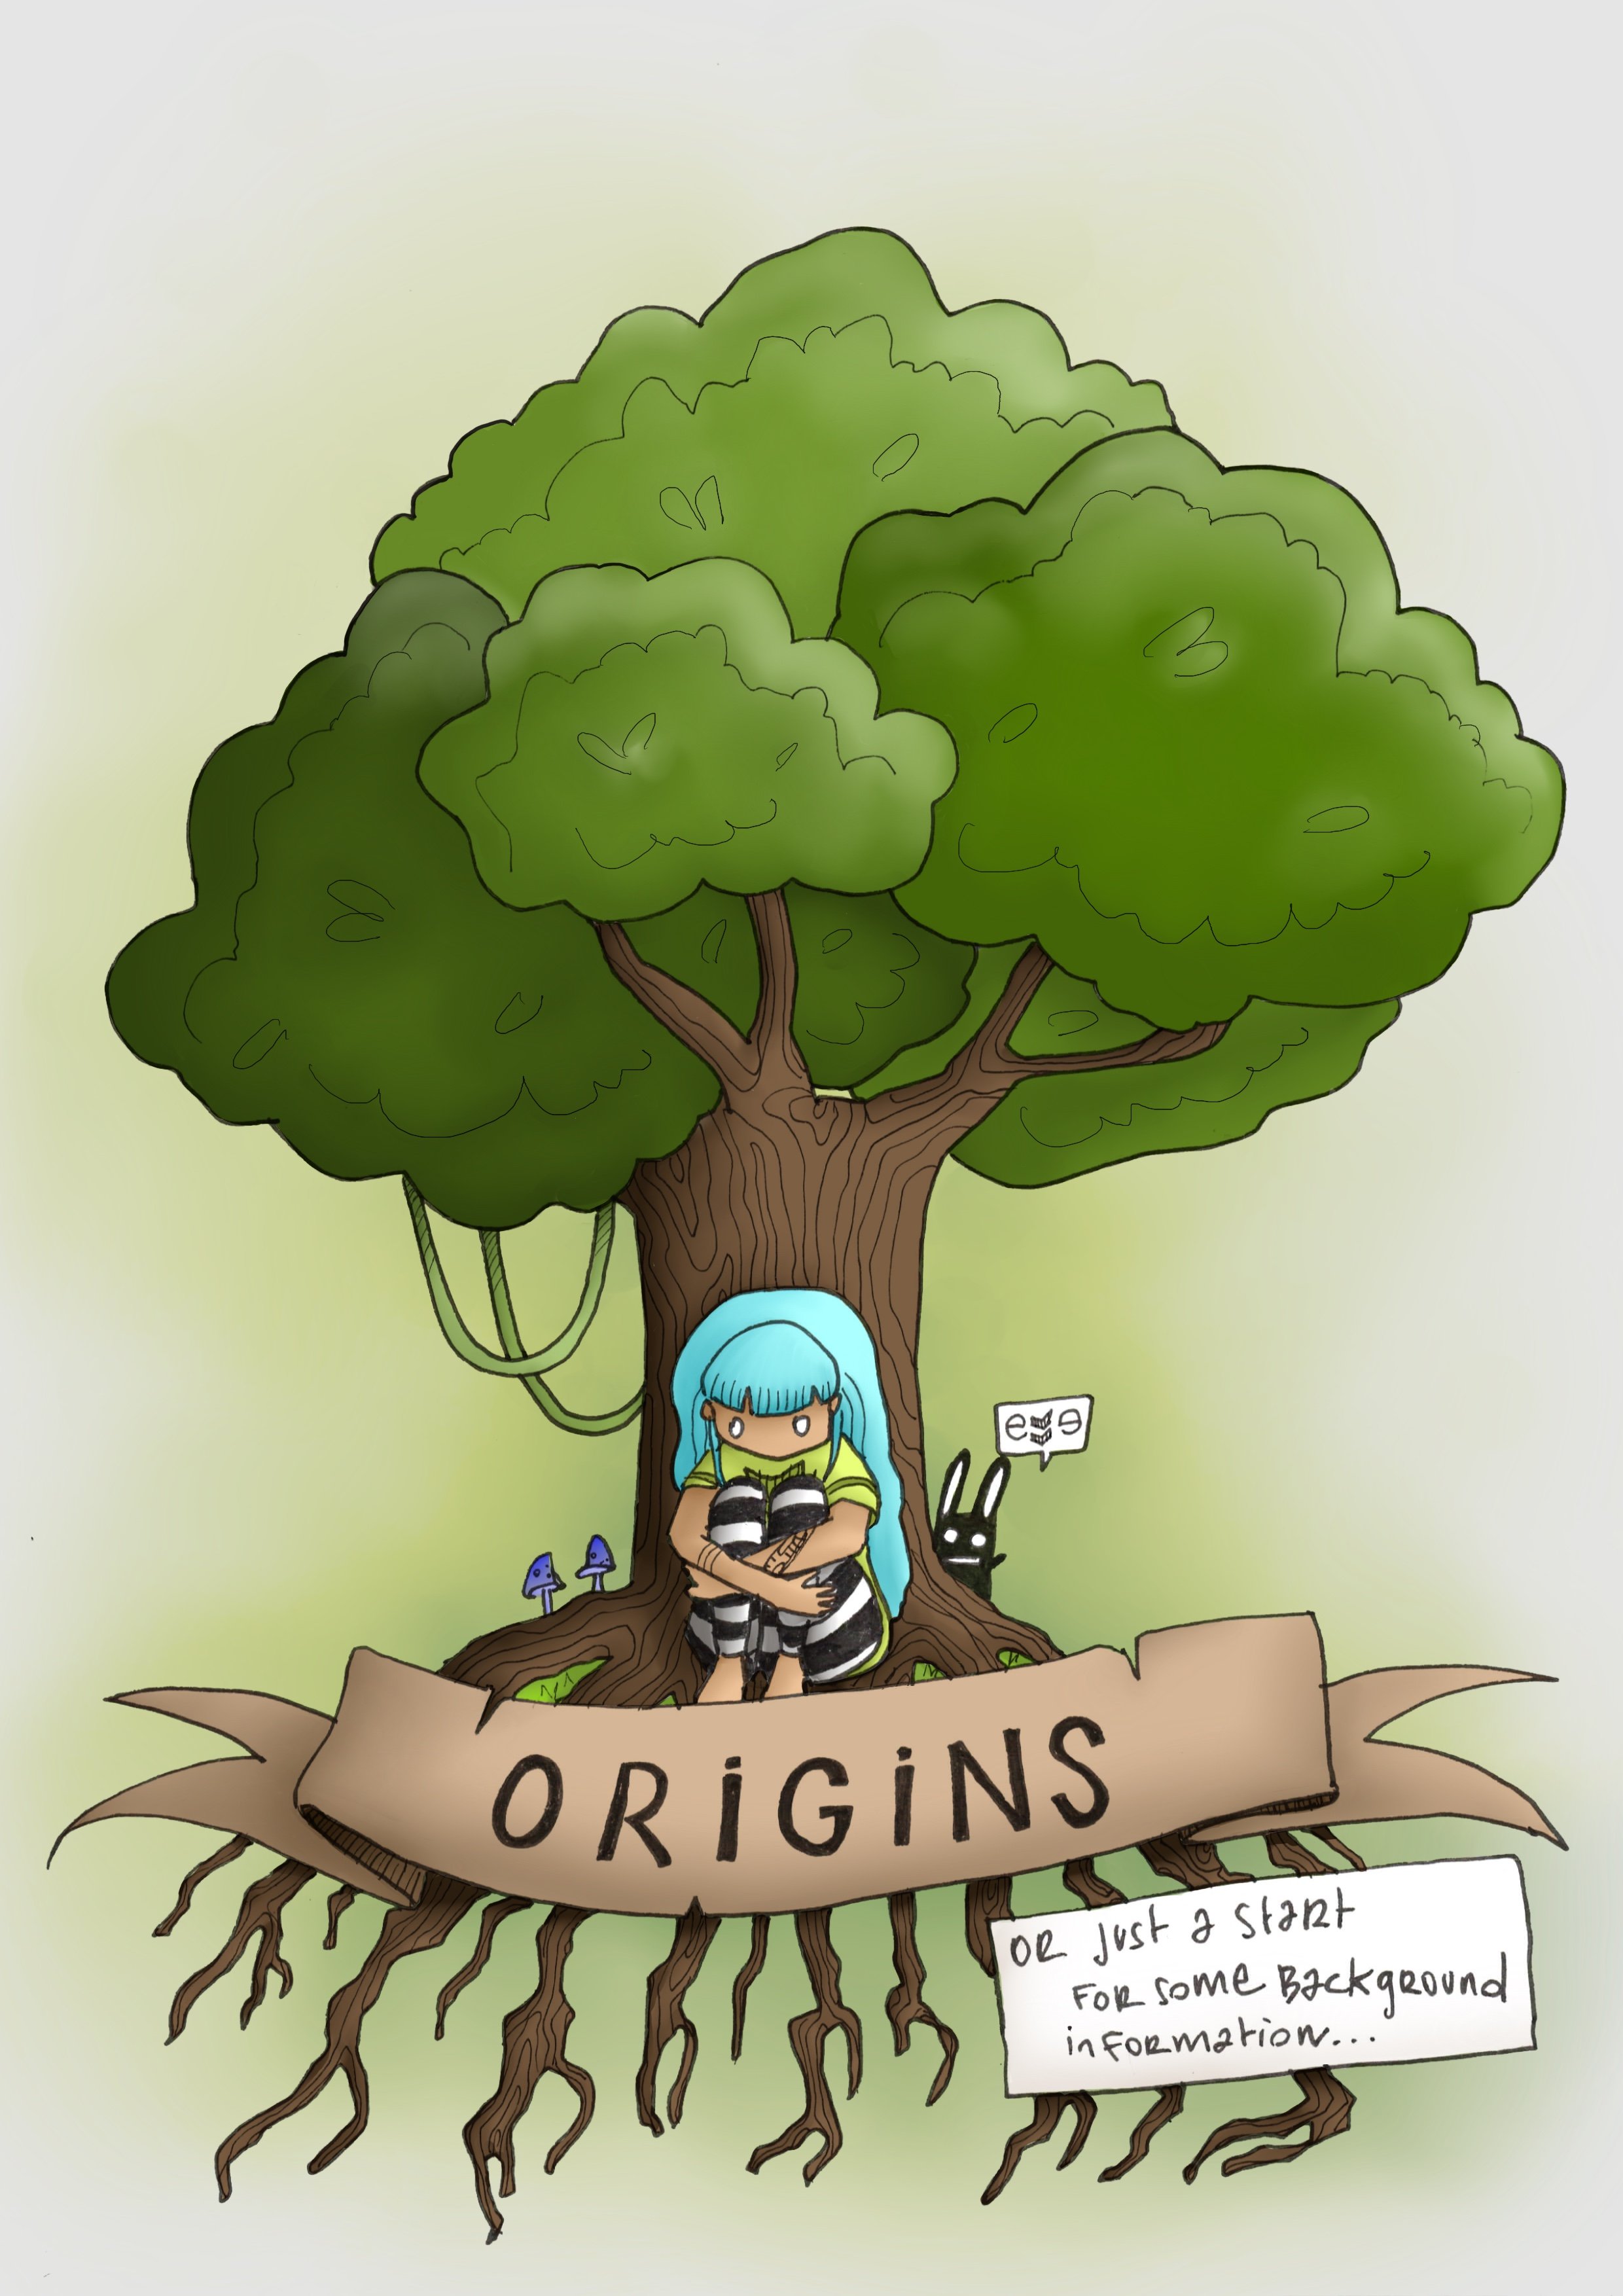 Origins - page